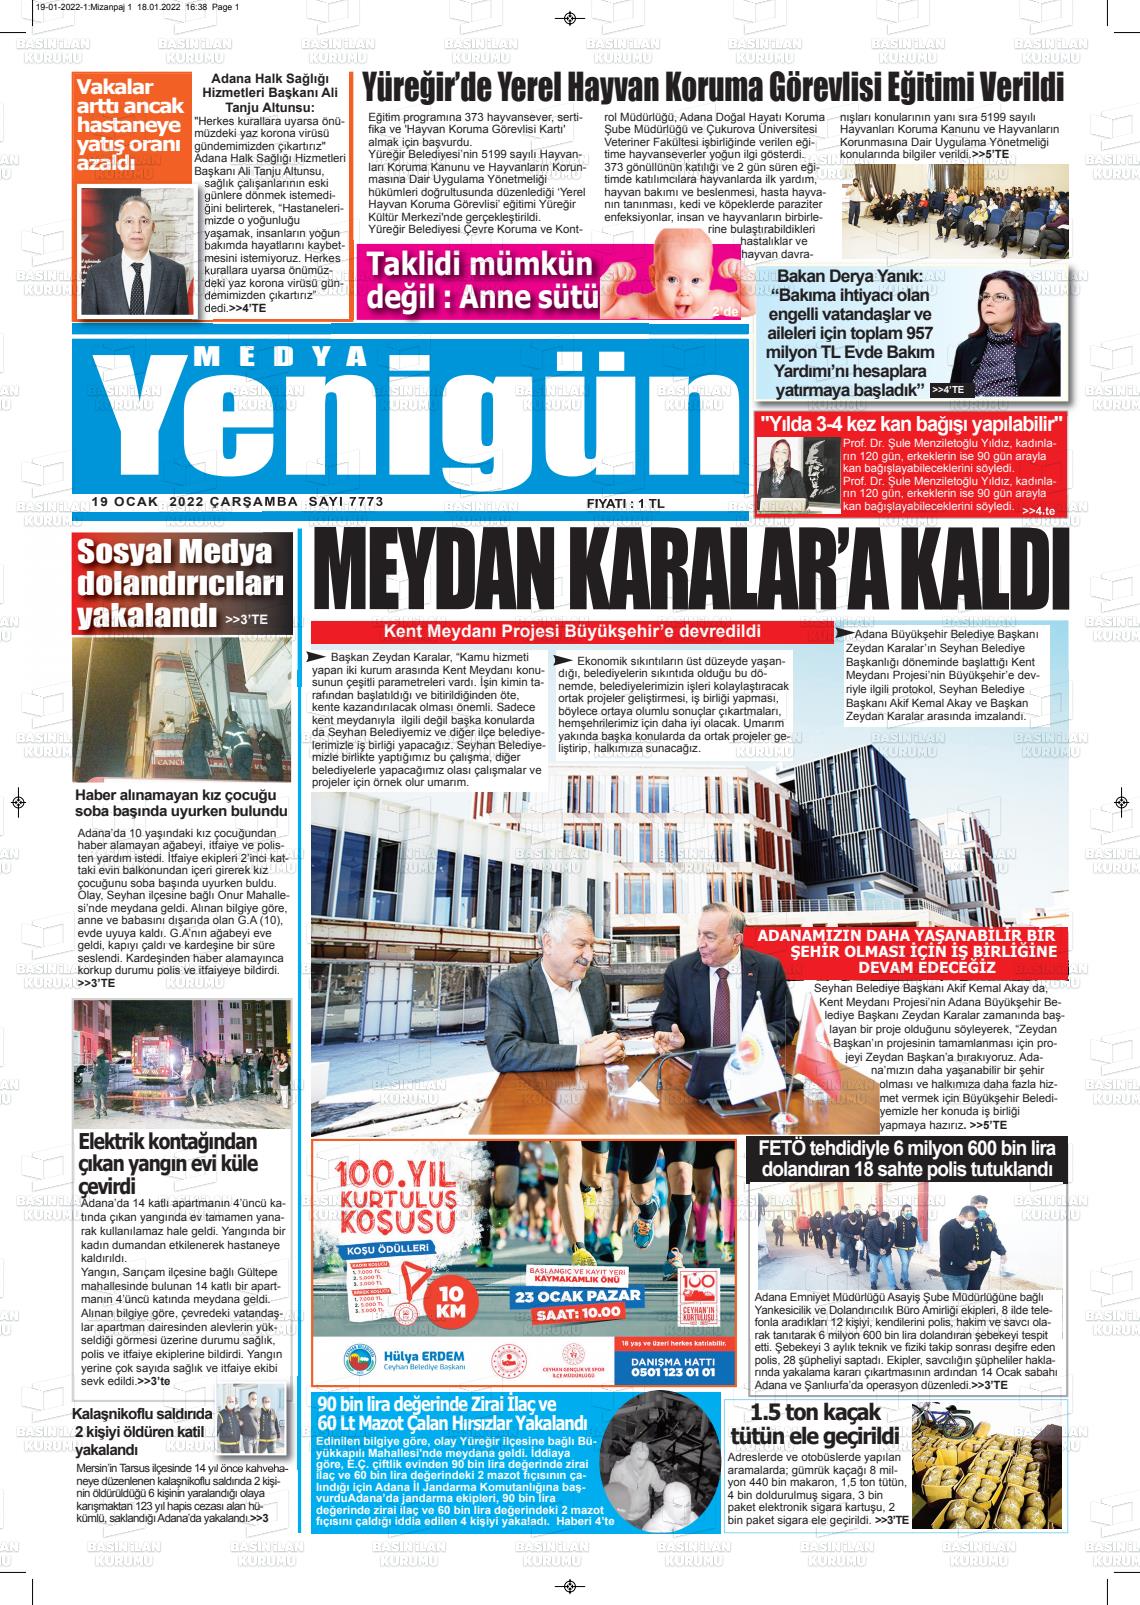 19 Ocak 2022 Medya Yenigün Gazete Manşeti